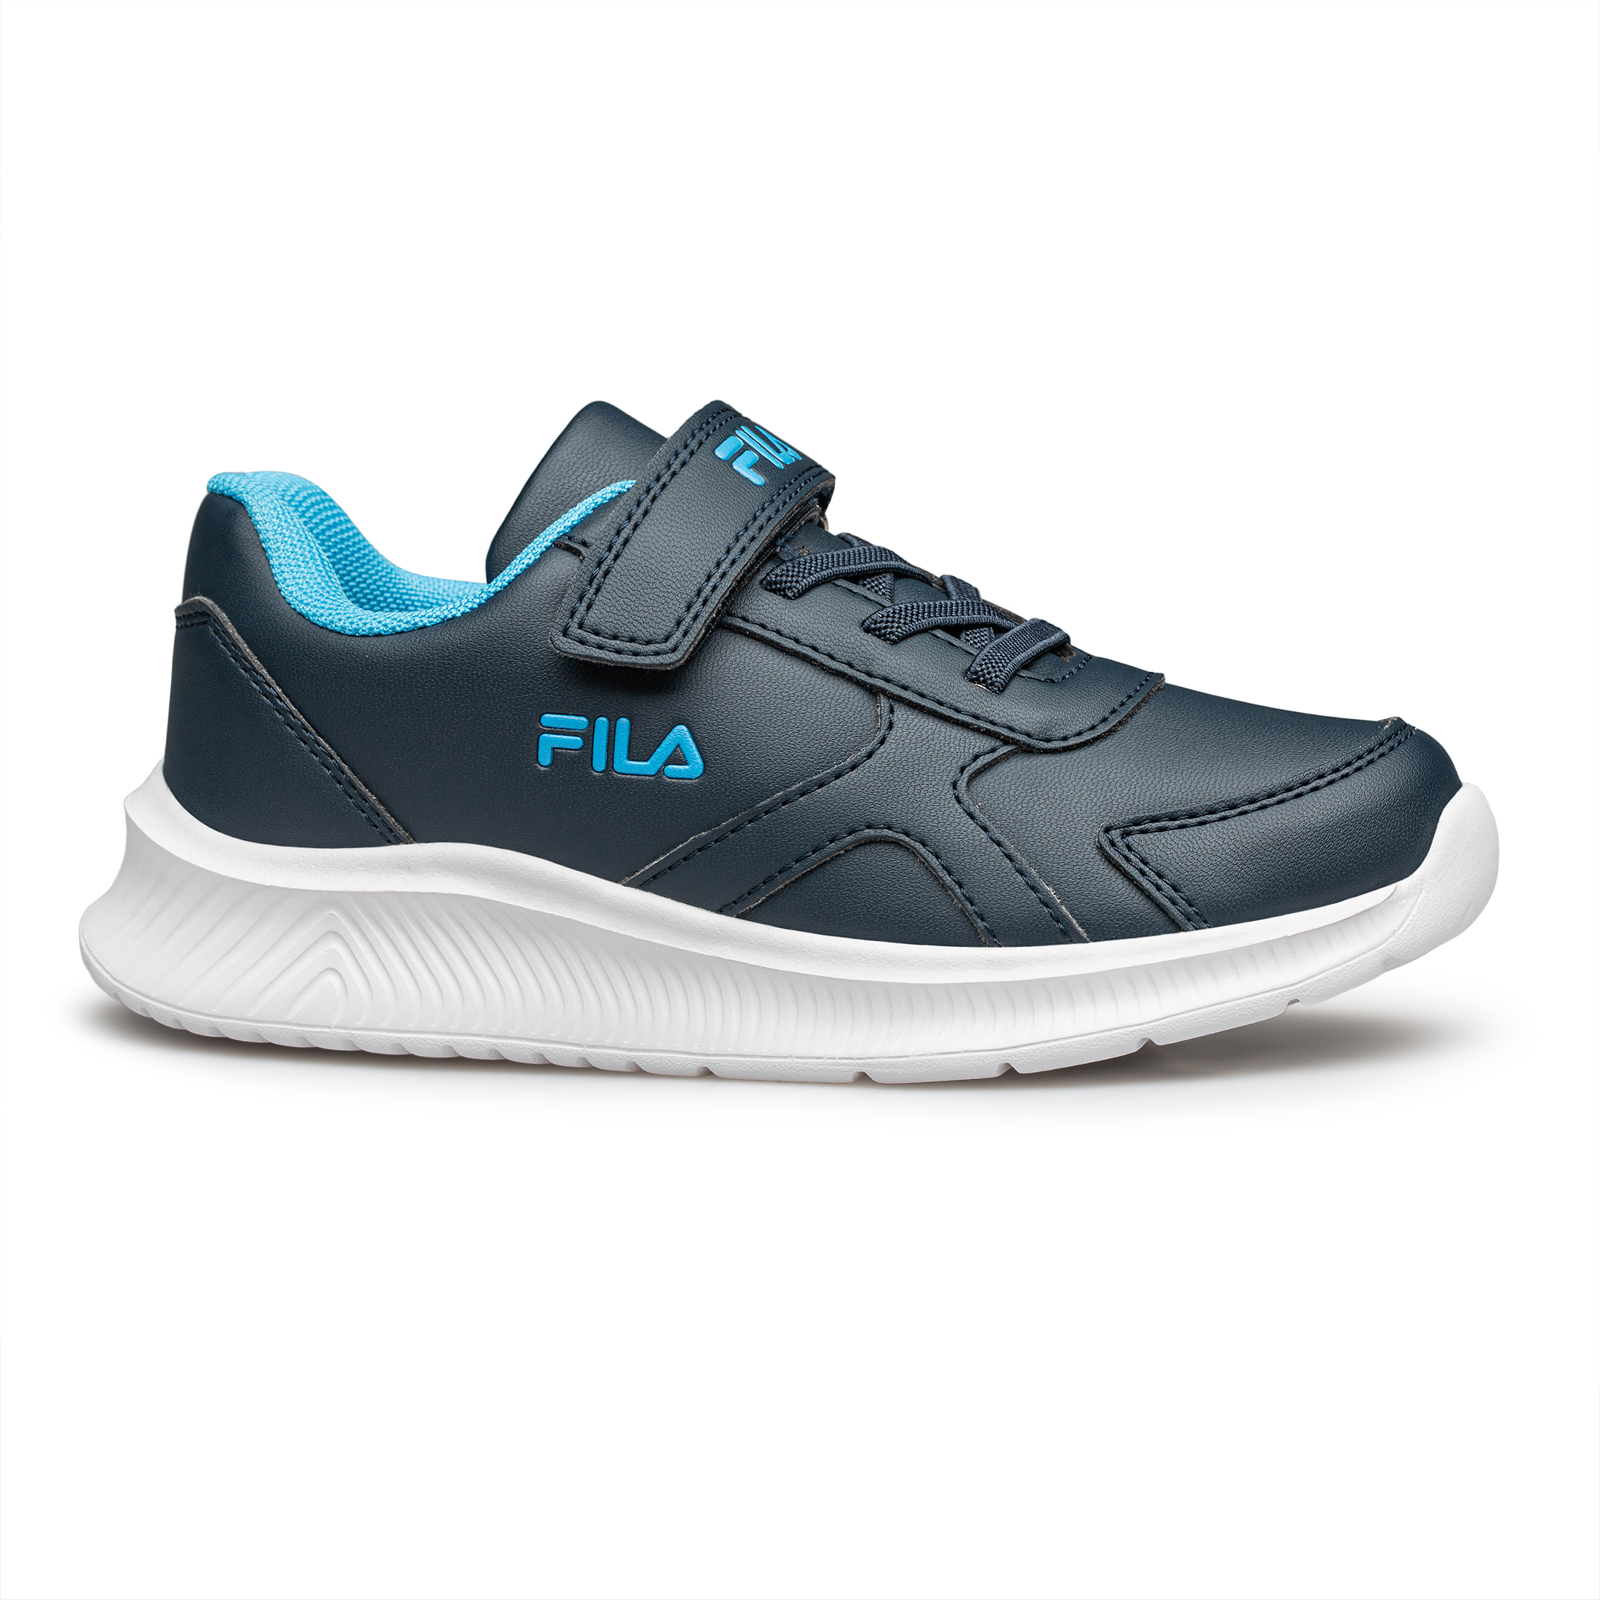 Fila - BRETT 4 V FOOTWEAR - DARK BLUE LIGHT BLUE Παιδικά > Παπούτσια > Αθλητικά > Παπούτσι Low Cut